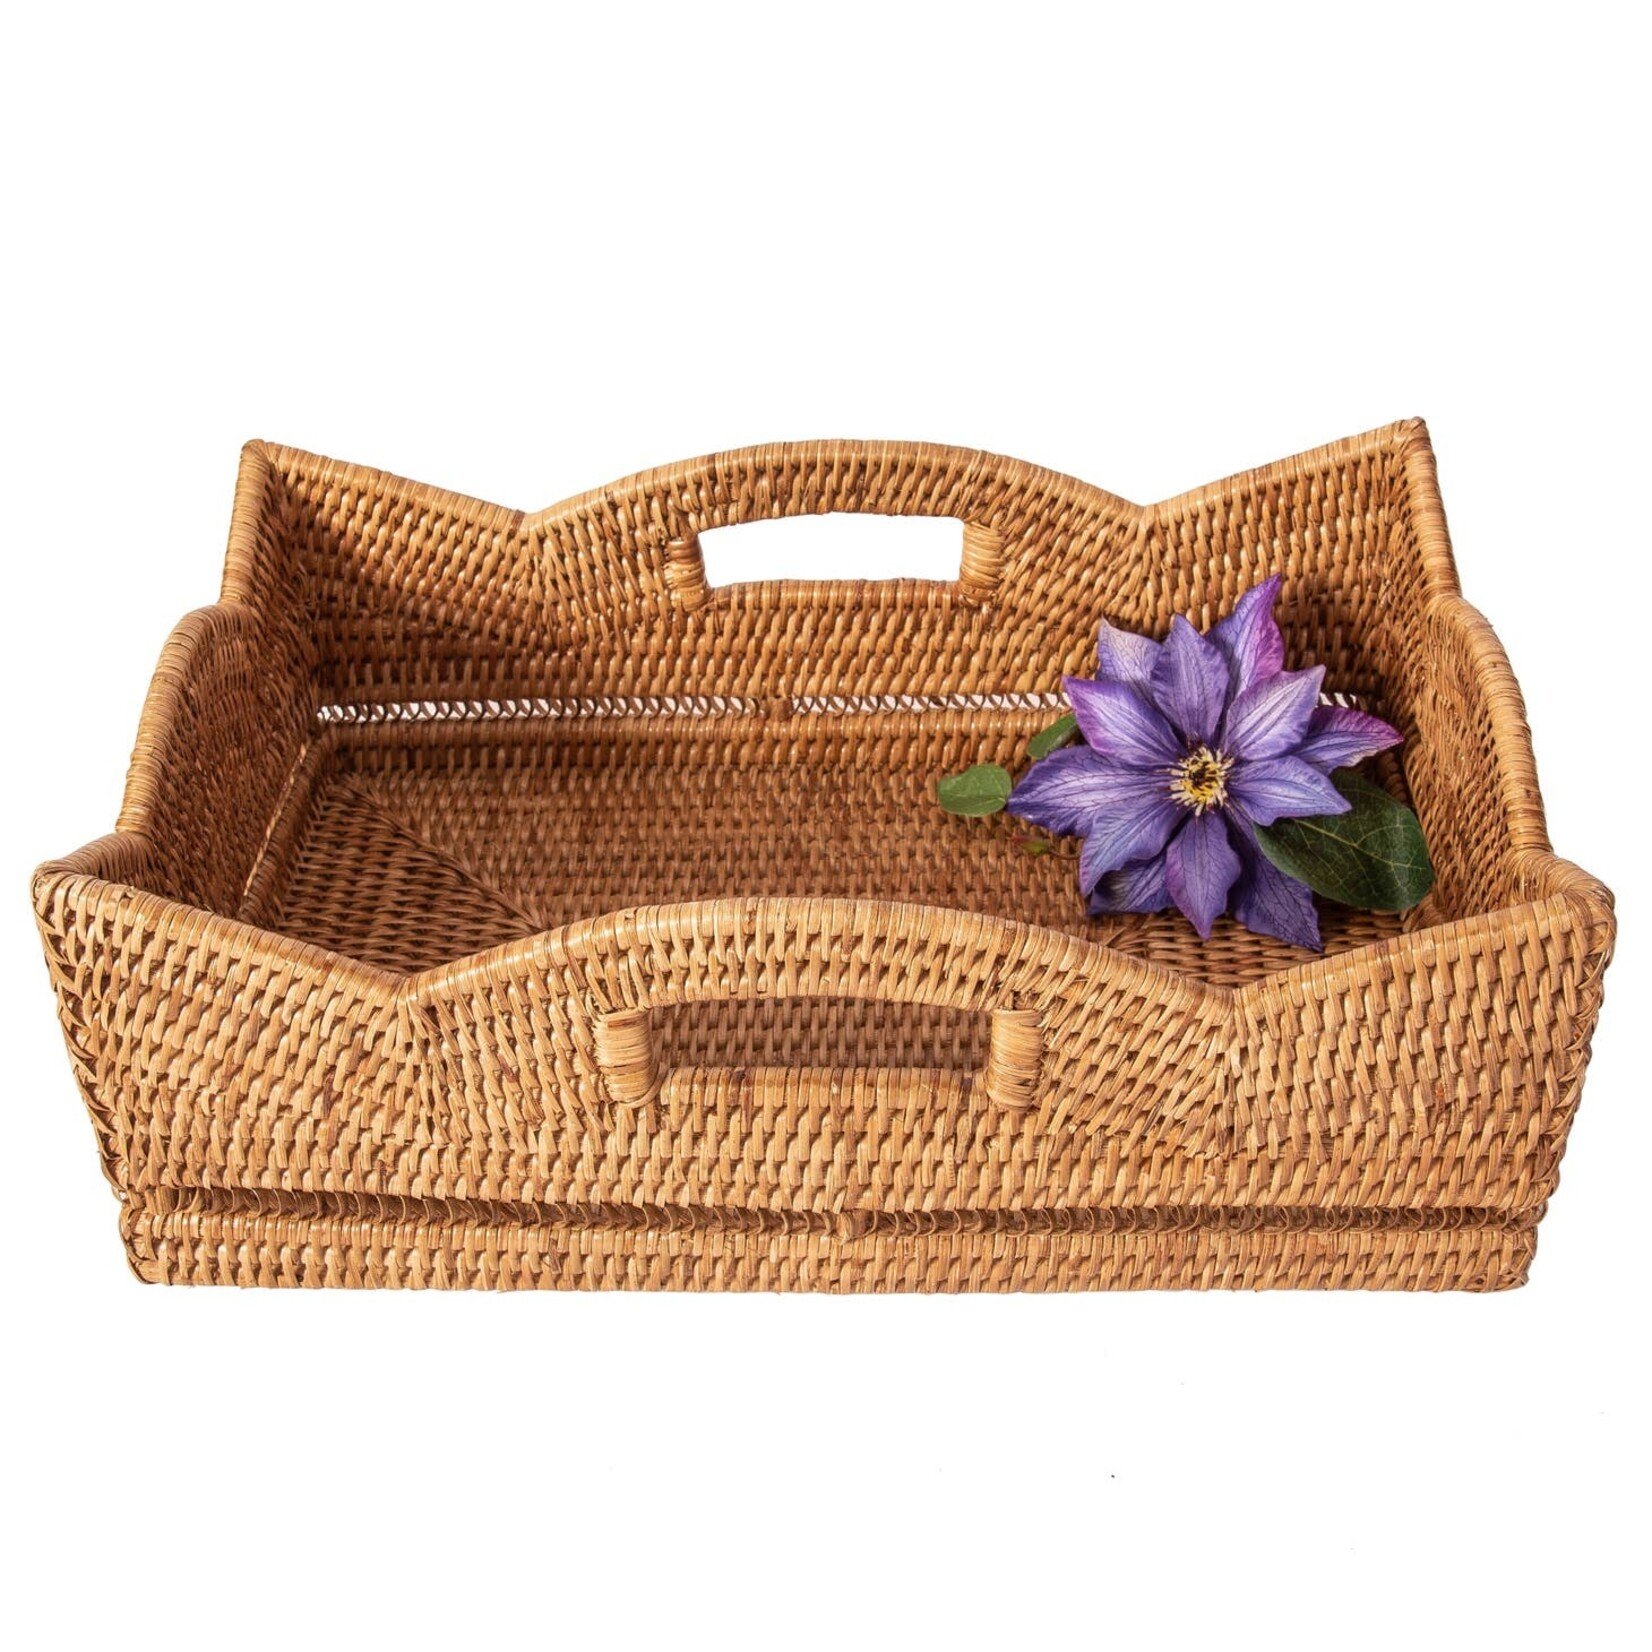 https://cdn.shoplightspeed.com/shops/634870/files/58595943/1652x1652x2/artifacts-trading-company-scalloped-rattan-baskets.jpg